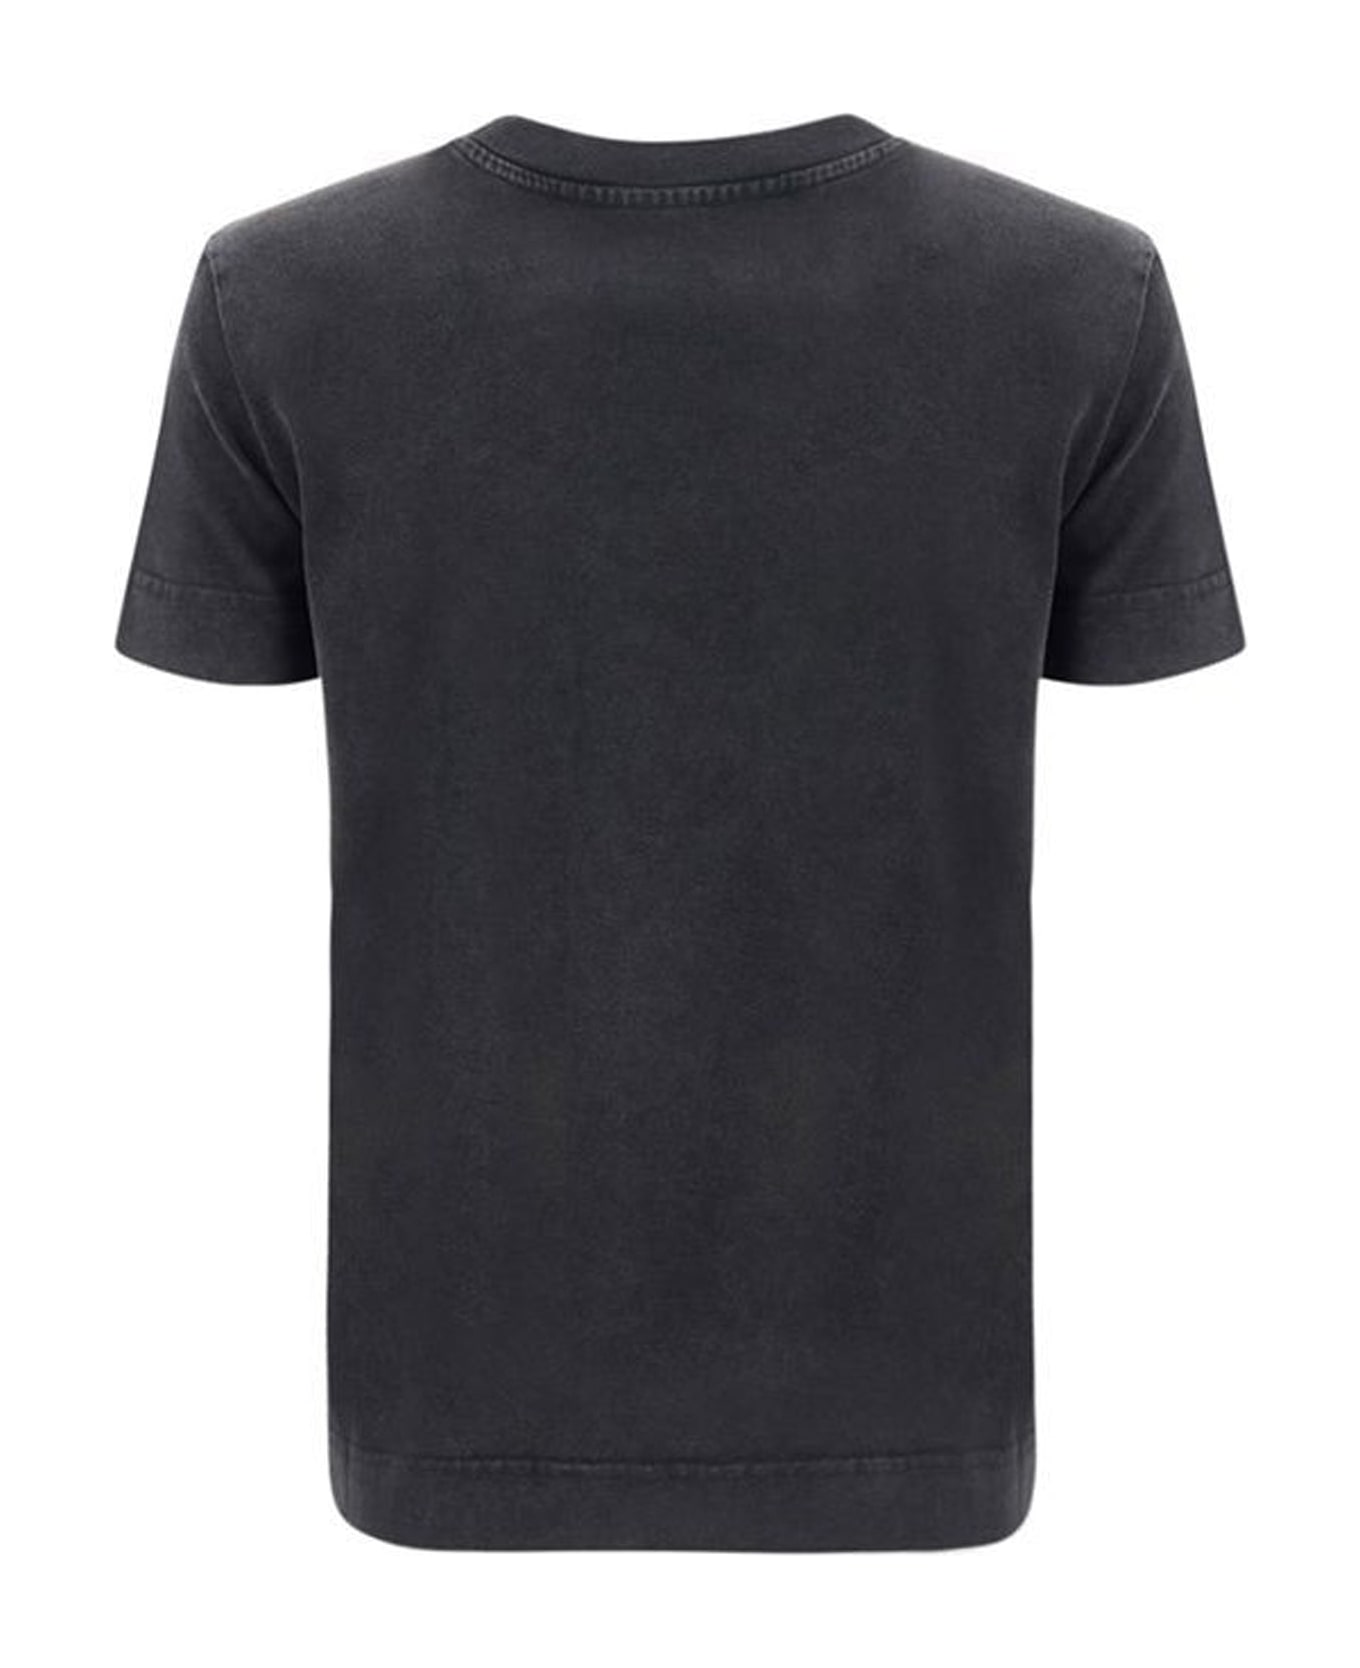 Givenchy Cotton Logo T-shirt - Black